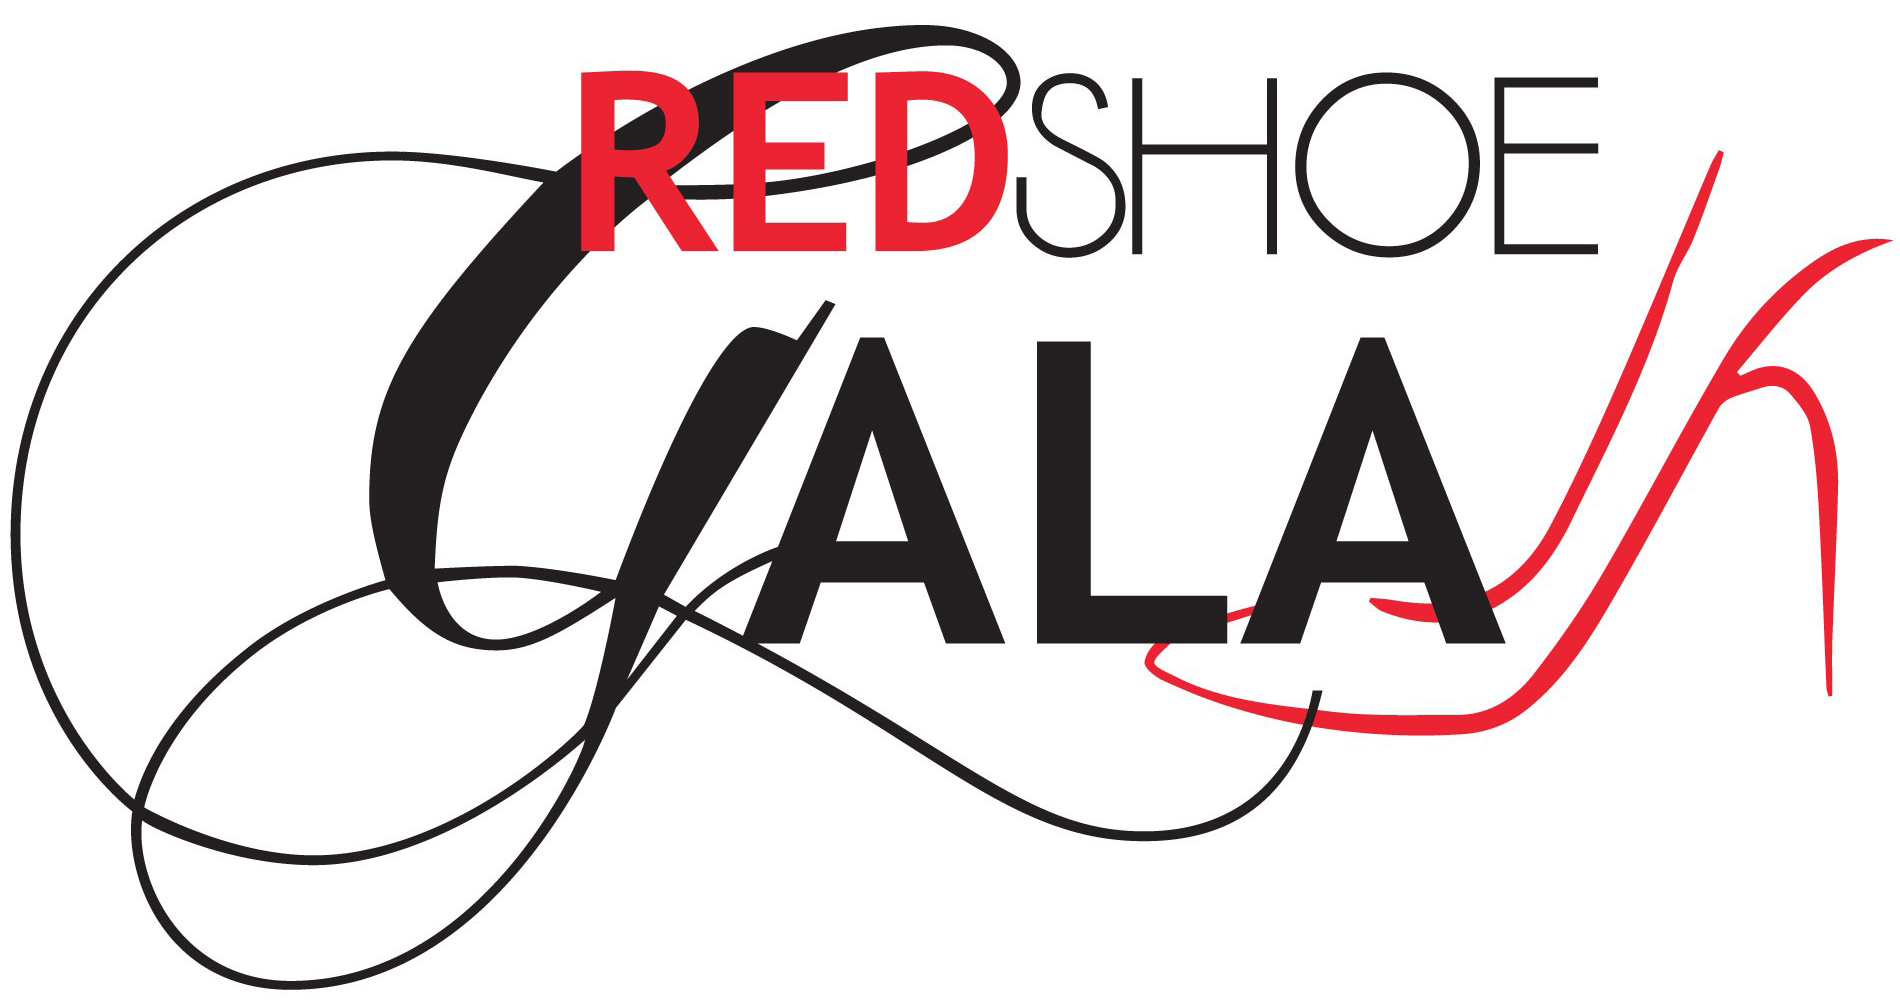 Red Shoe Gala